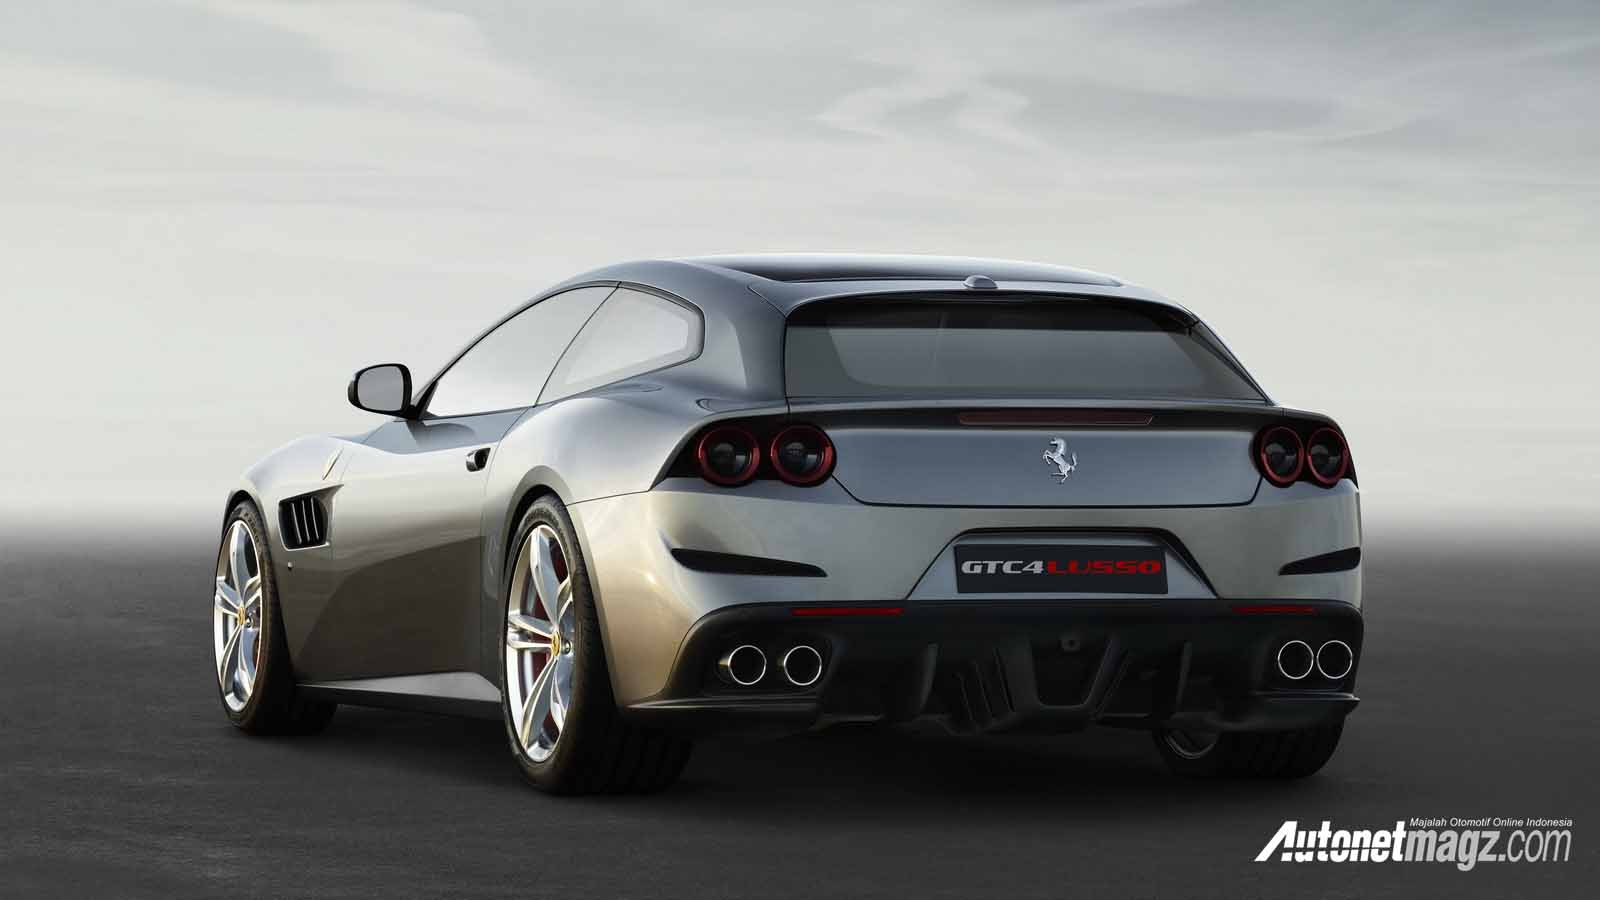 Berita, Ferrari GT4 Lusso: Ferrari Seriusi Pasar Mobil 4 Penumpang, Target Pasar Asia